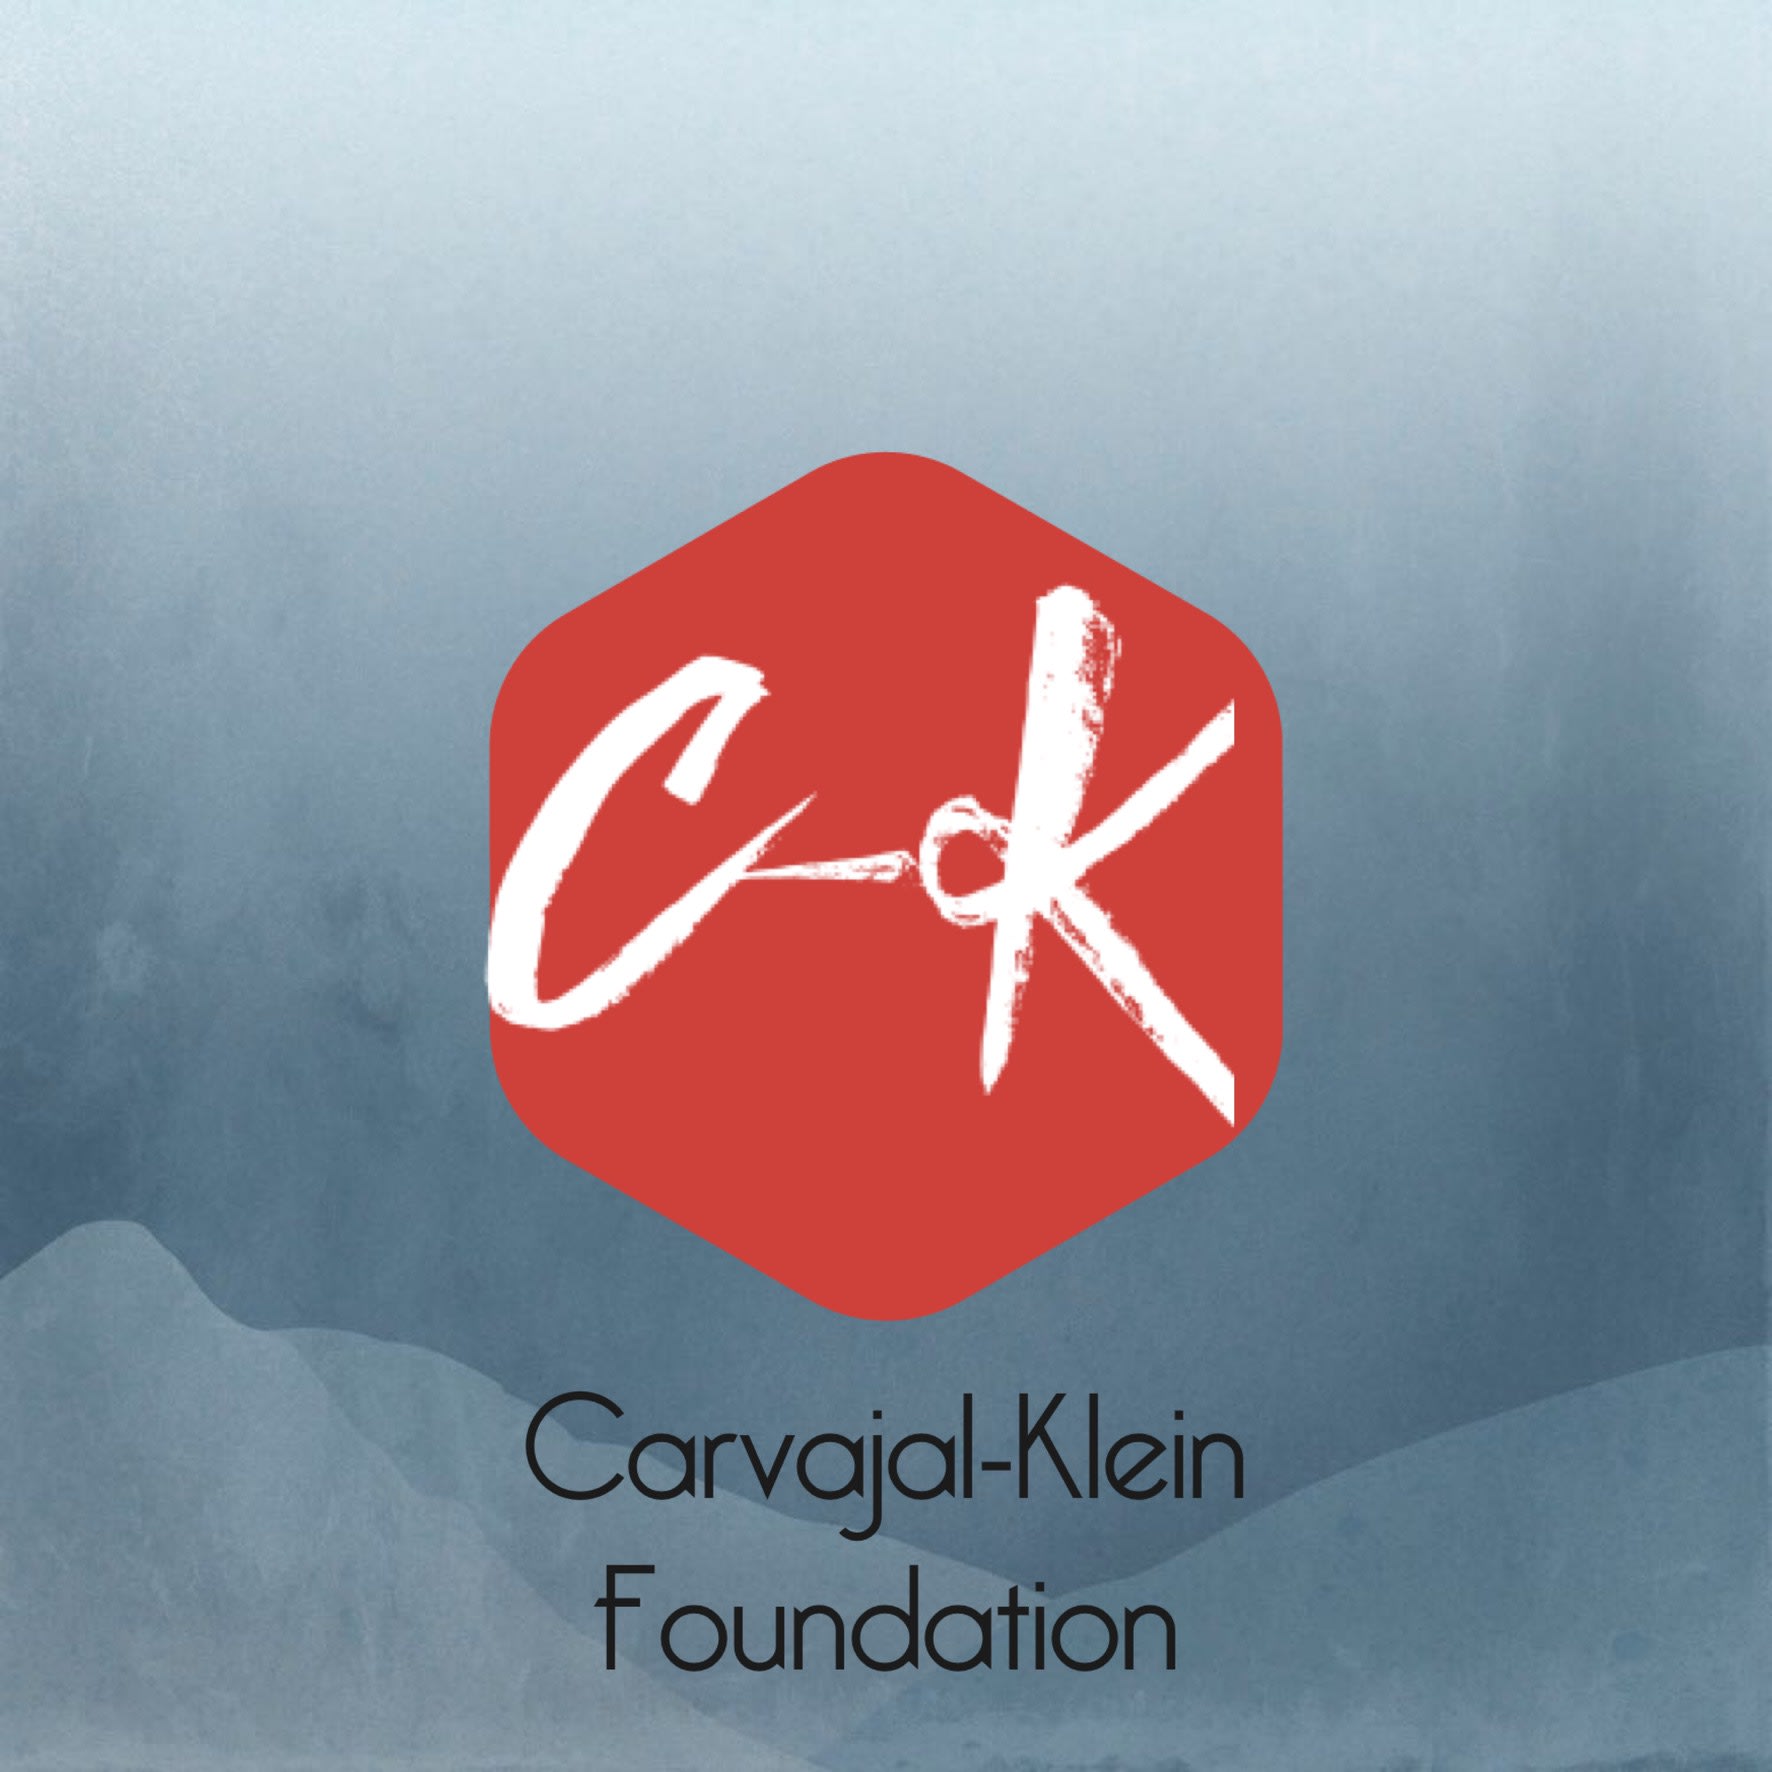 Fundación Carvajal-Klein